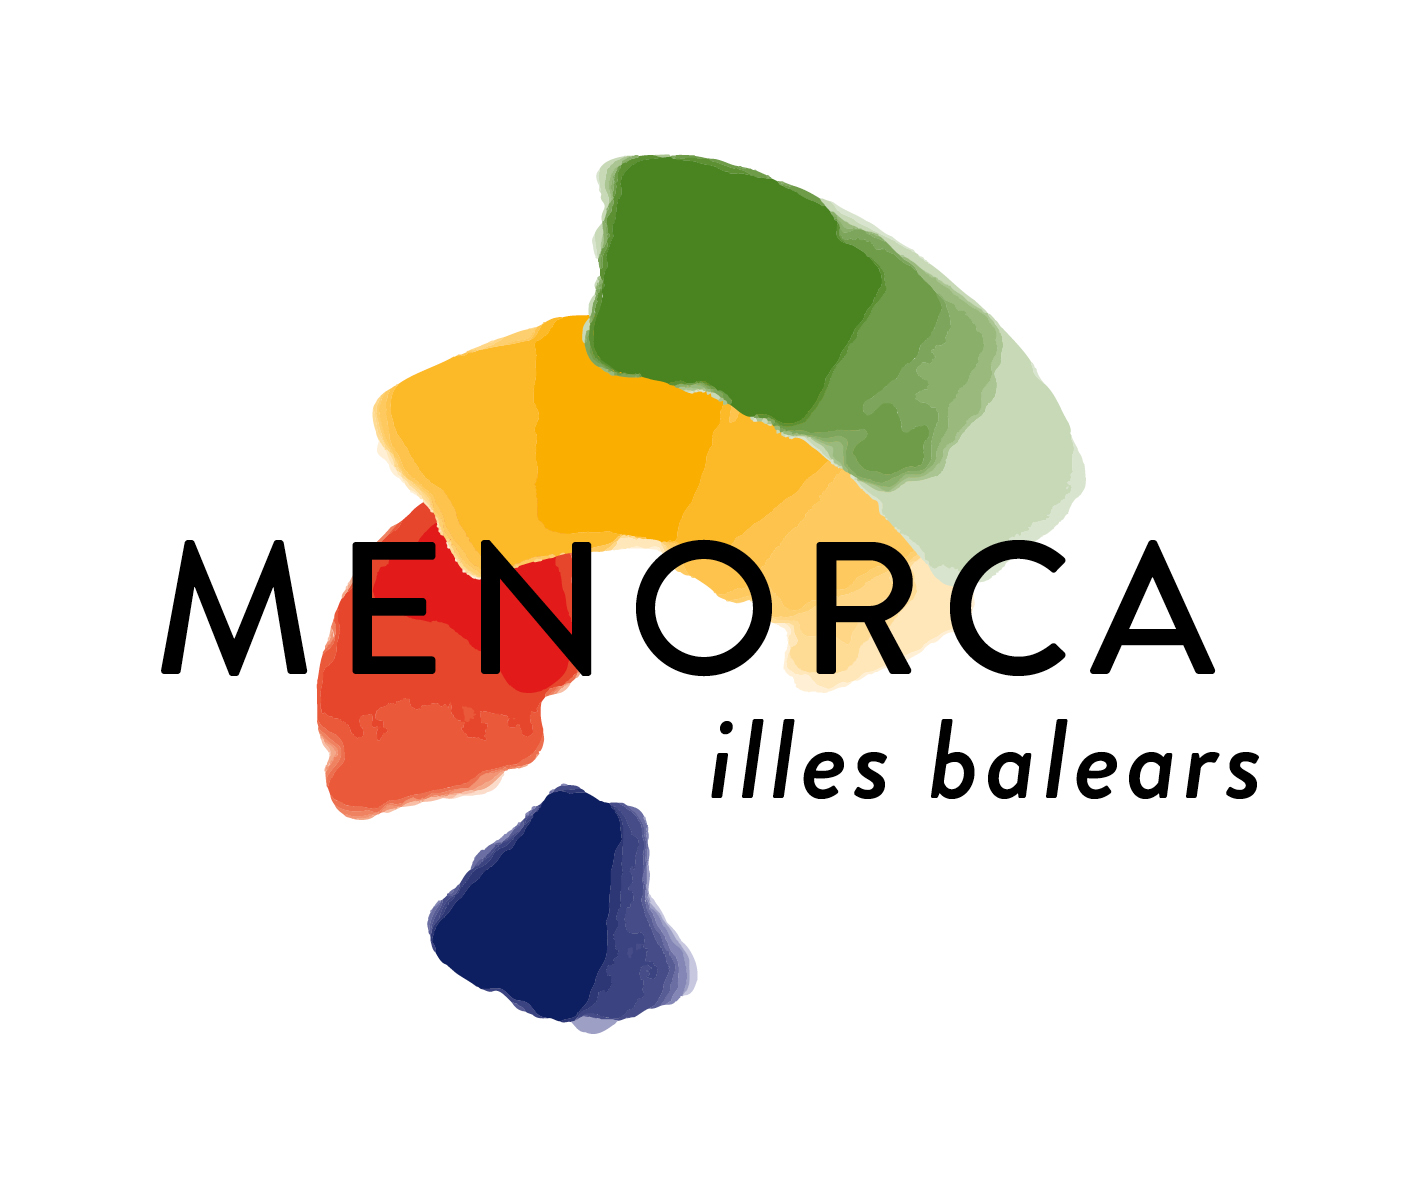 Menorca Logo